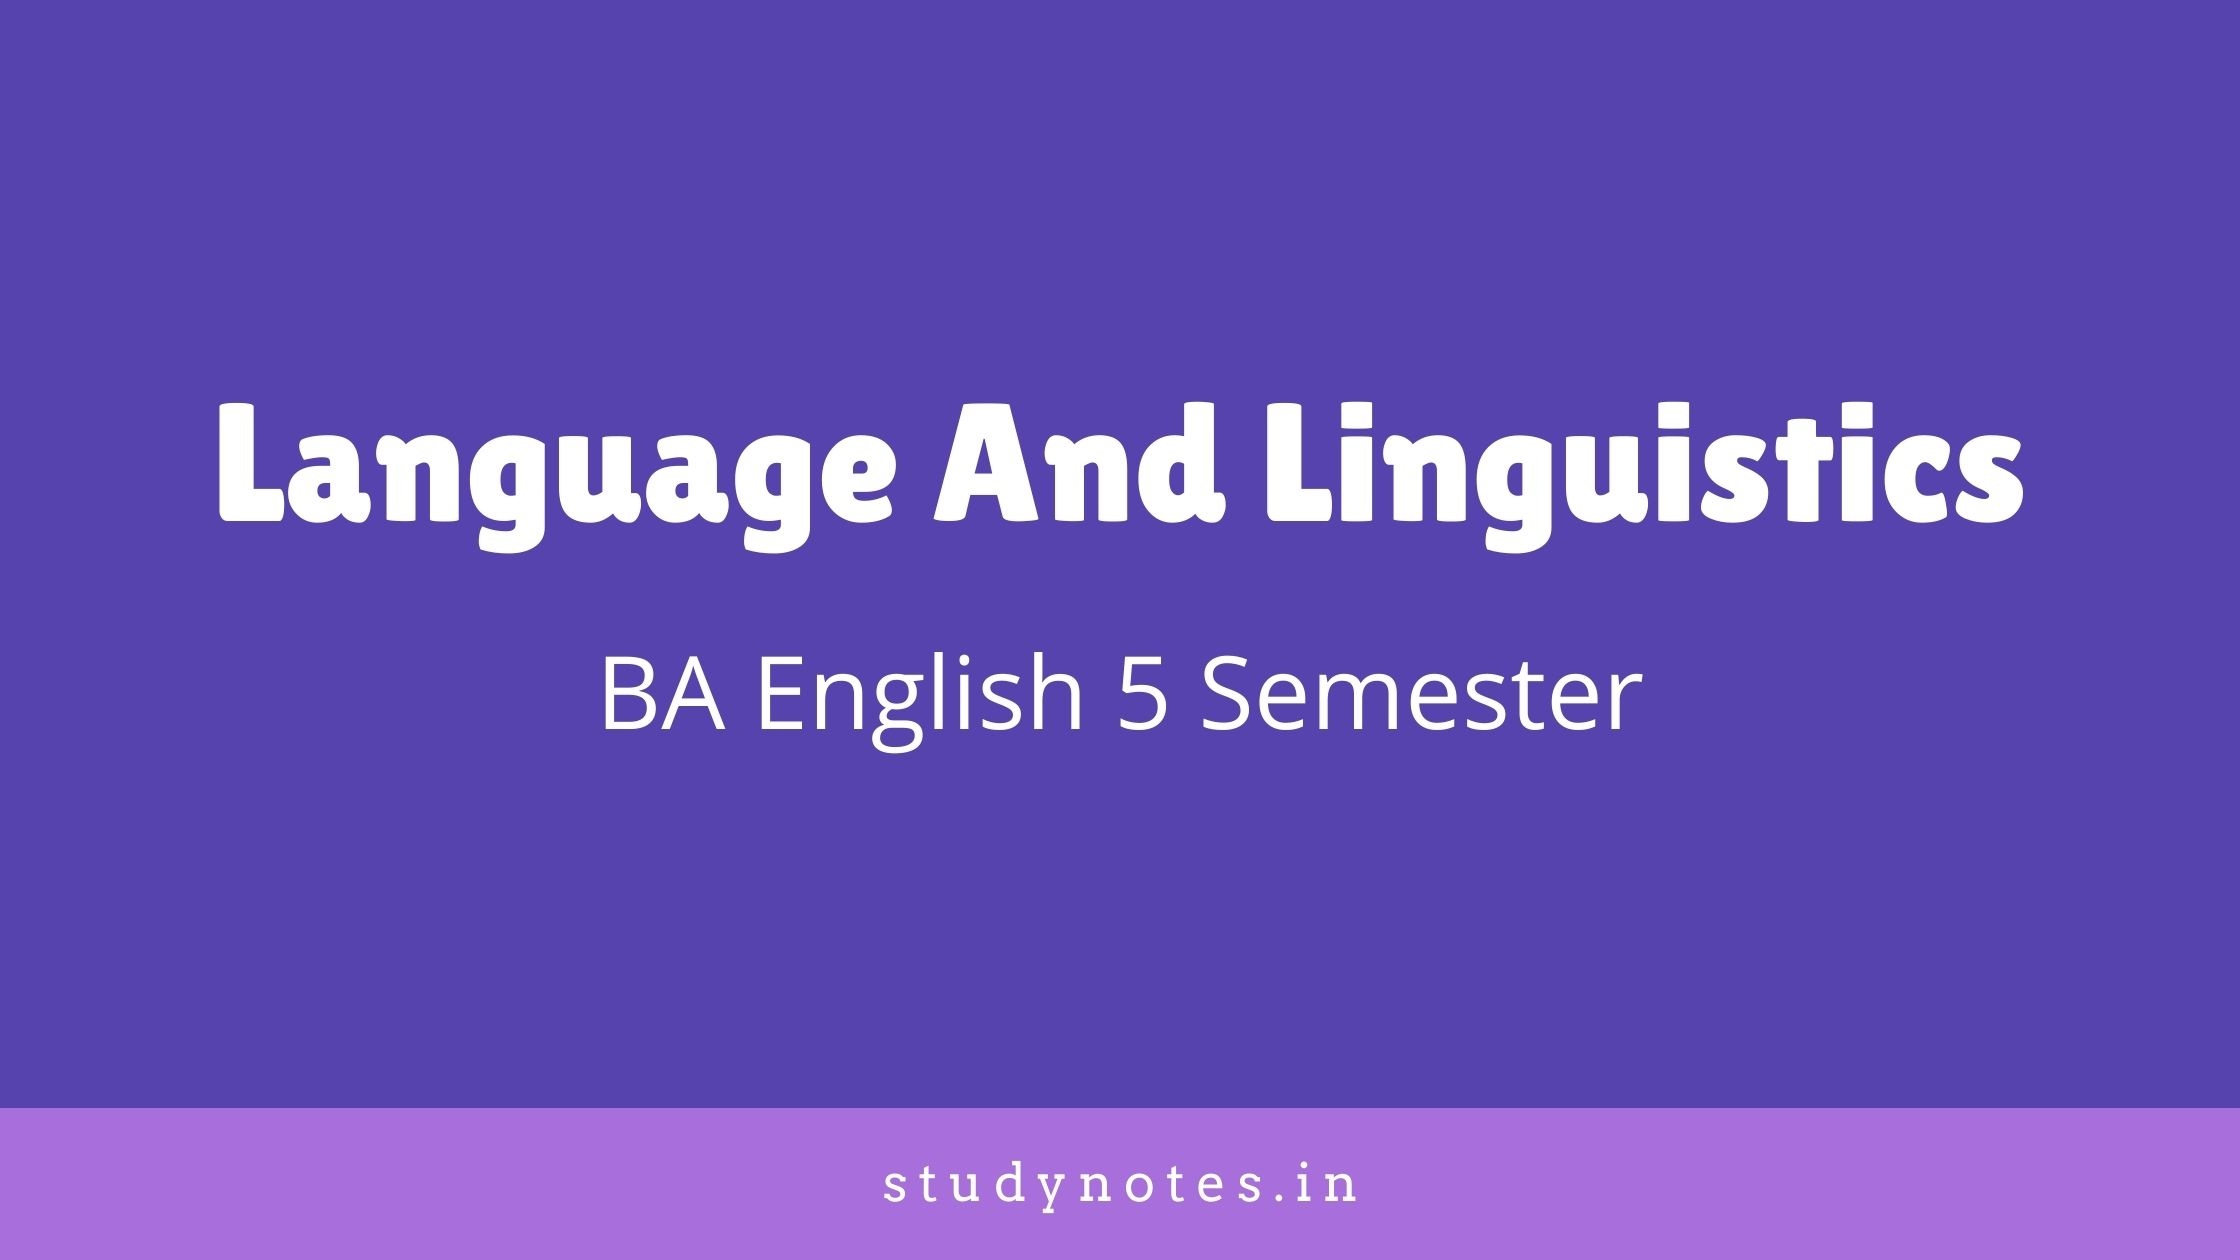 Language and linguistics qp